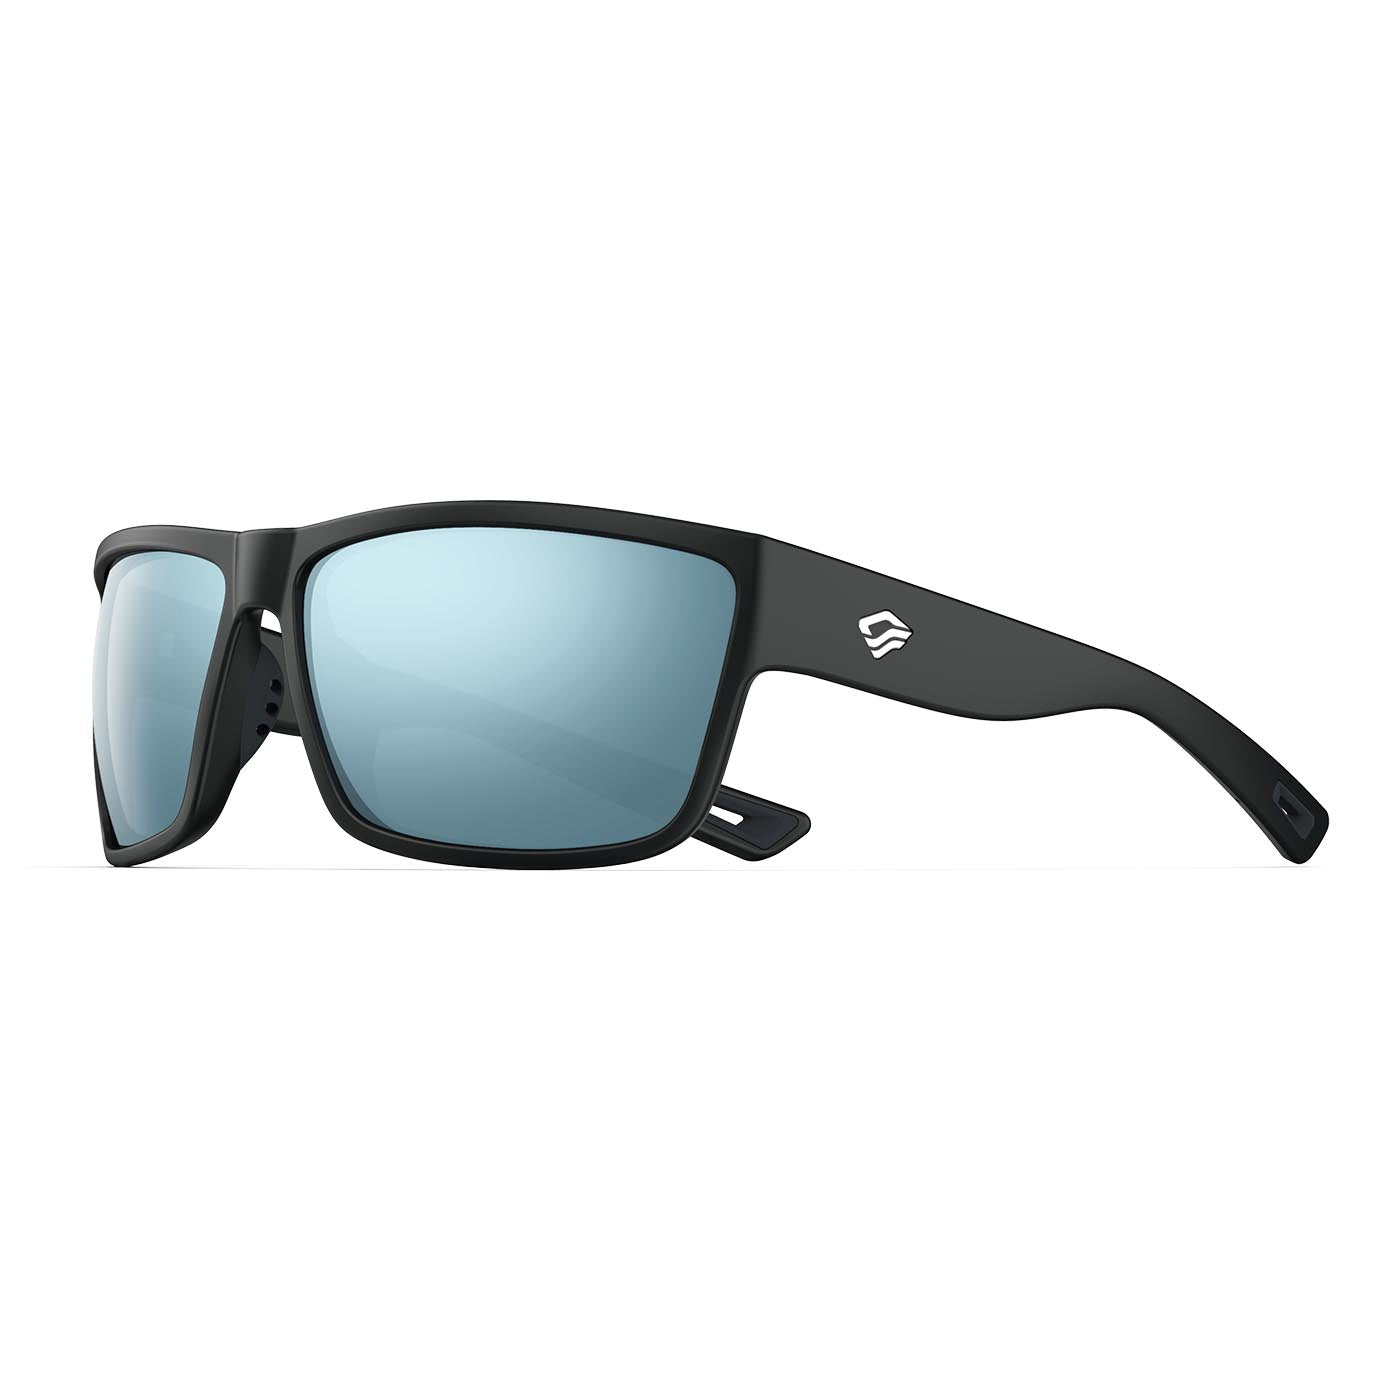 Pure Polarized Sports Sunglasses with Lifetime Warranty